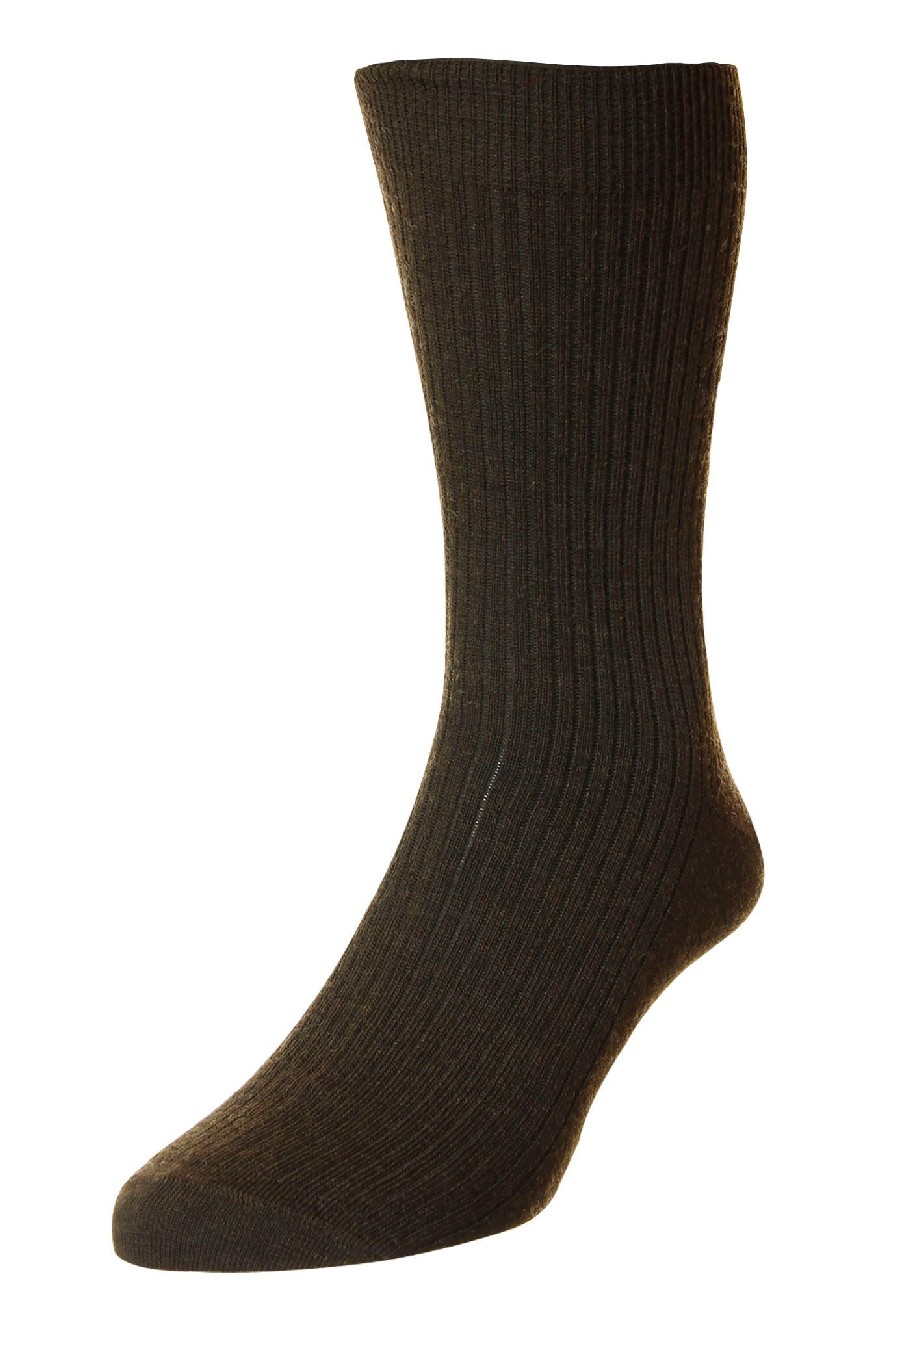 HJ Socks HJ70 Dk Brown size 6-11